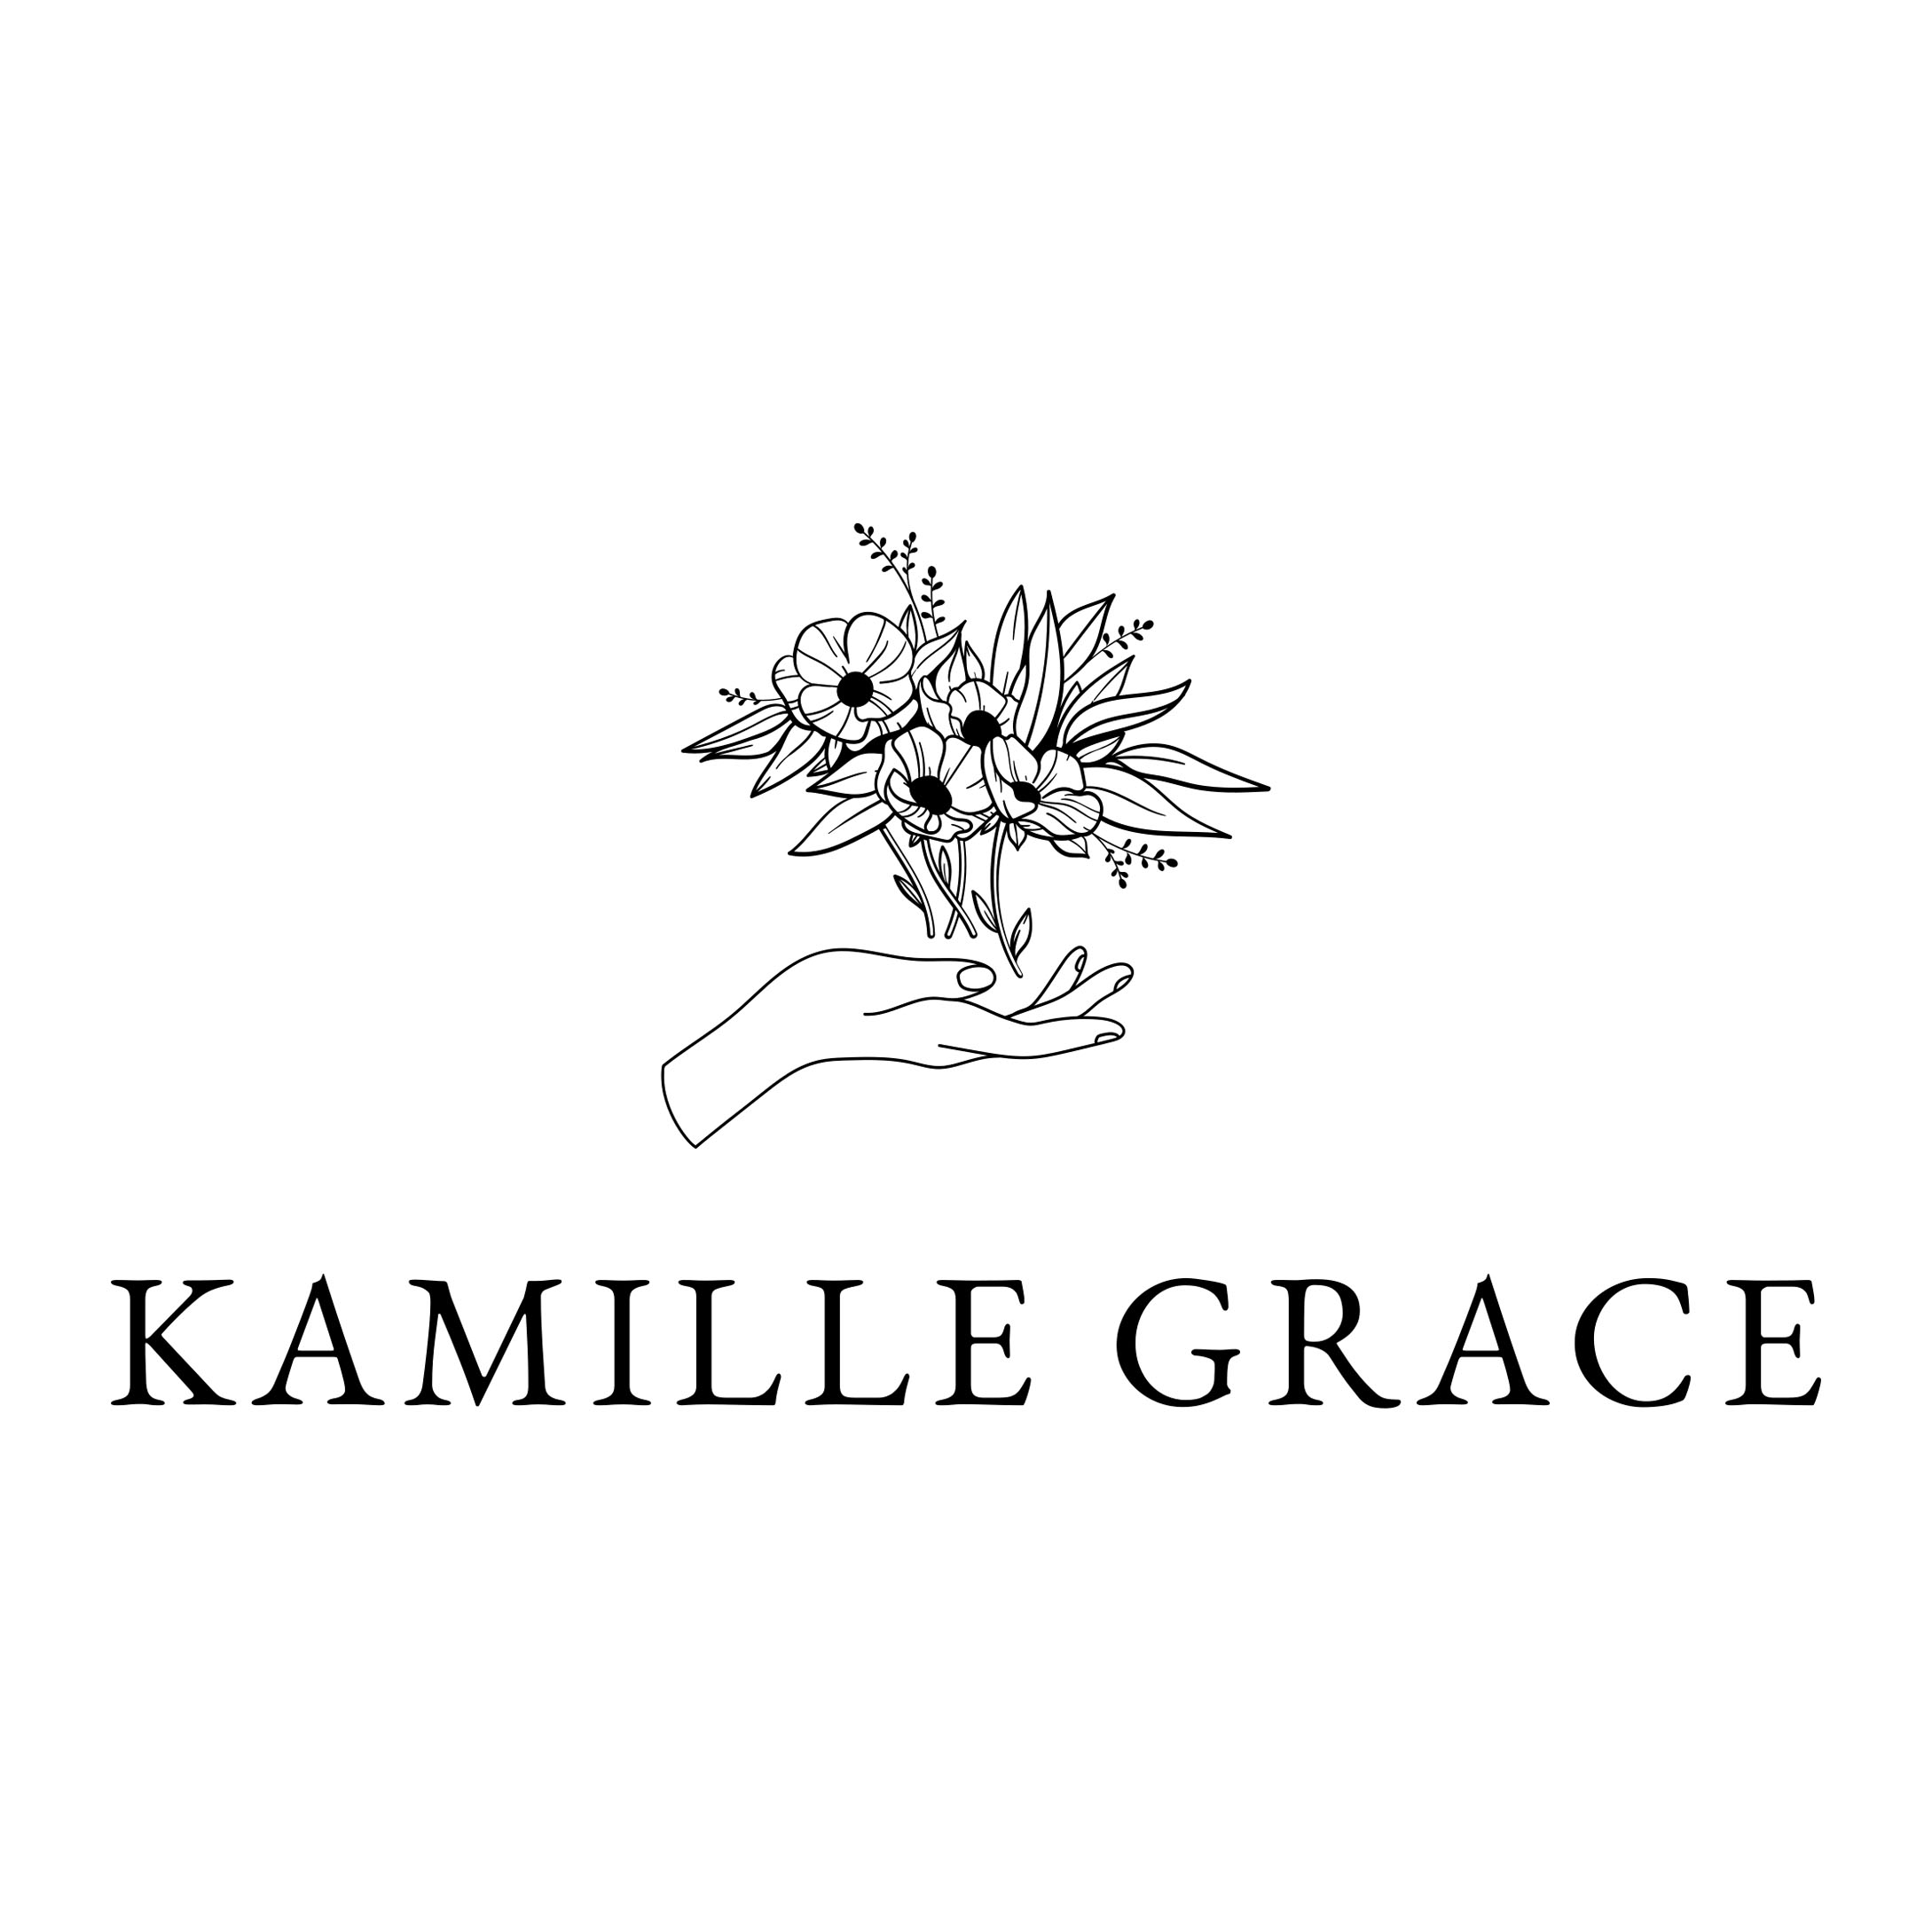 Kamille Grace | Where Creativity Meets Purpose